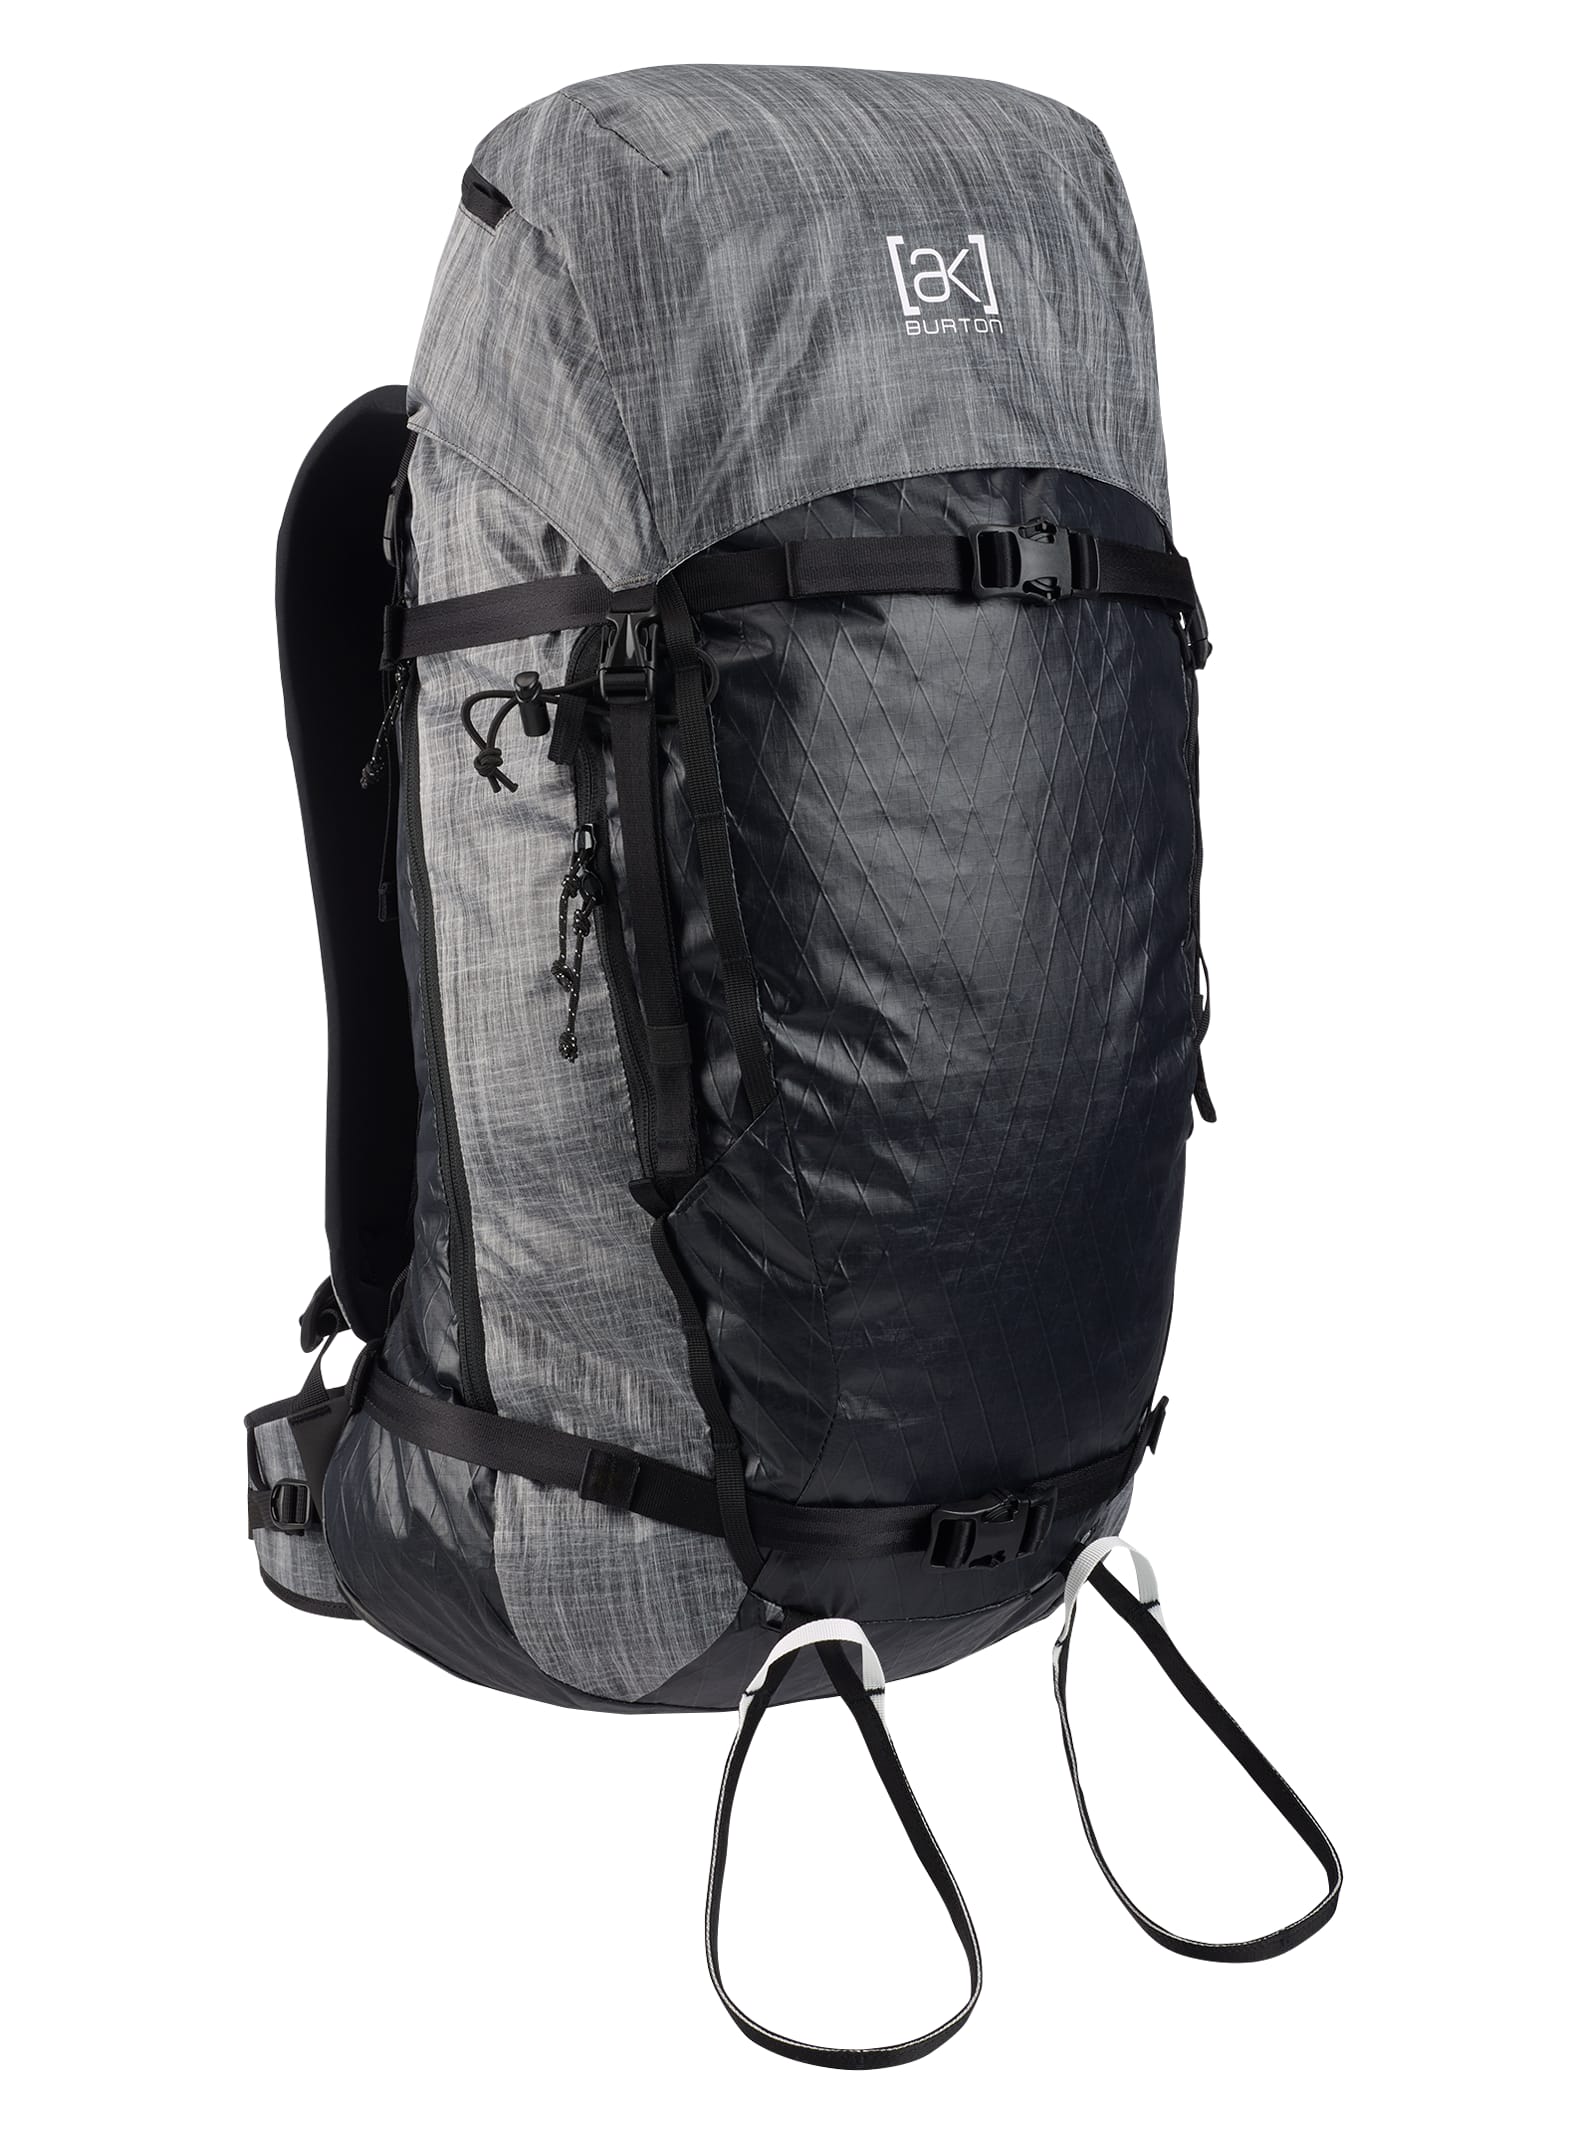 Burton [ak] Incline Ultralight 35L Backpack | Burton.com Winter 2020 US